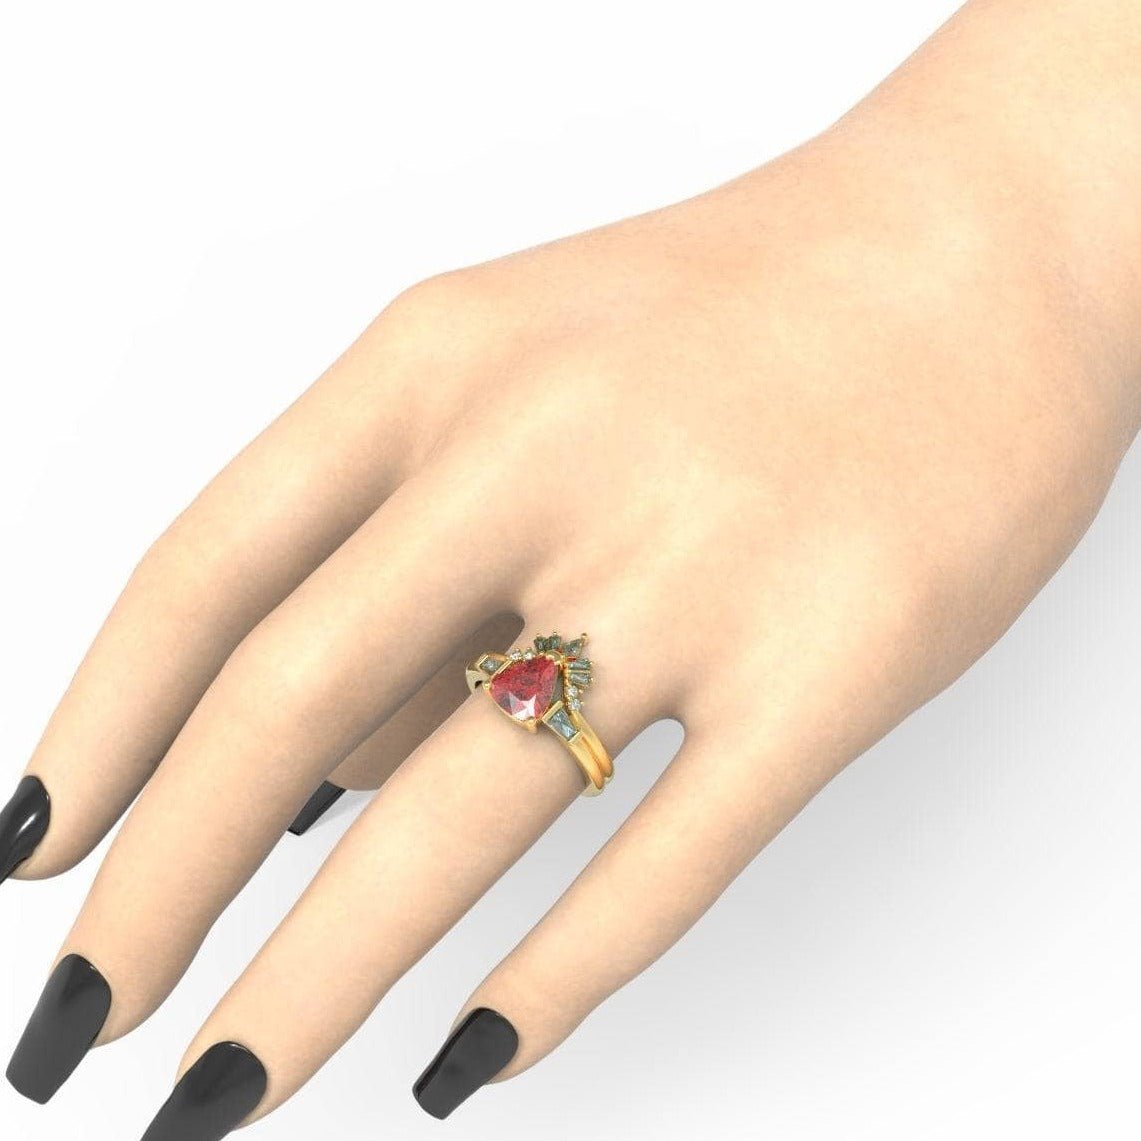 Assasin's Romance Engagement Ring- 14k Yellow Gold Video Game Inspired Rings - Black Diamonds New York